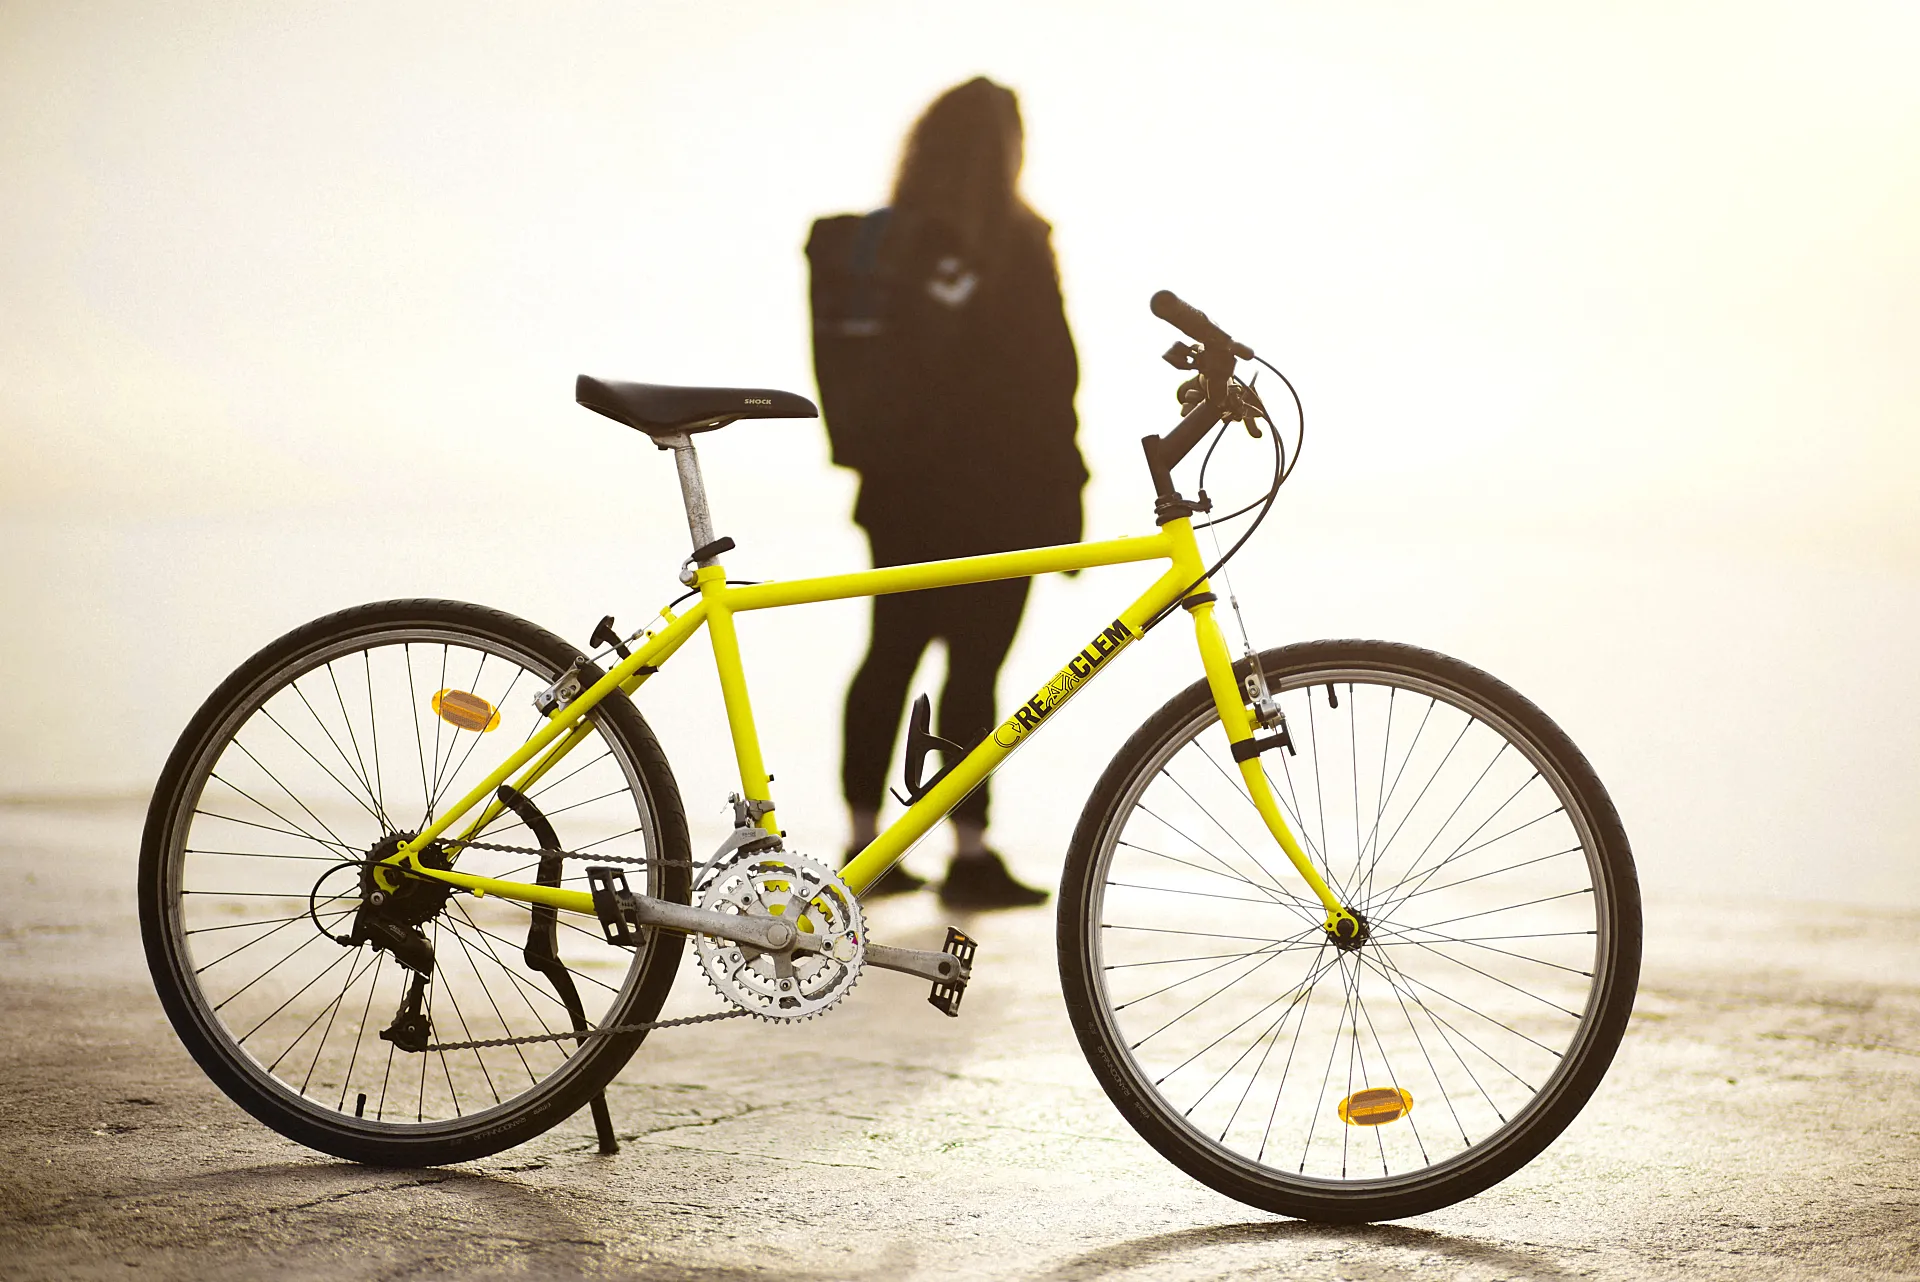 Rebiciclem ofrece tres líneas de bicicletas: urbanas, híbridas e infantiles.